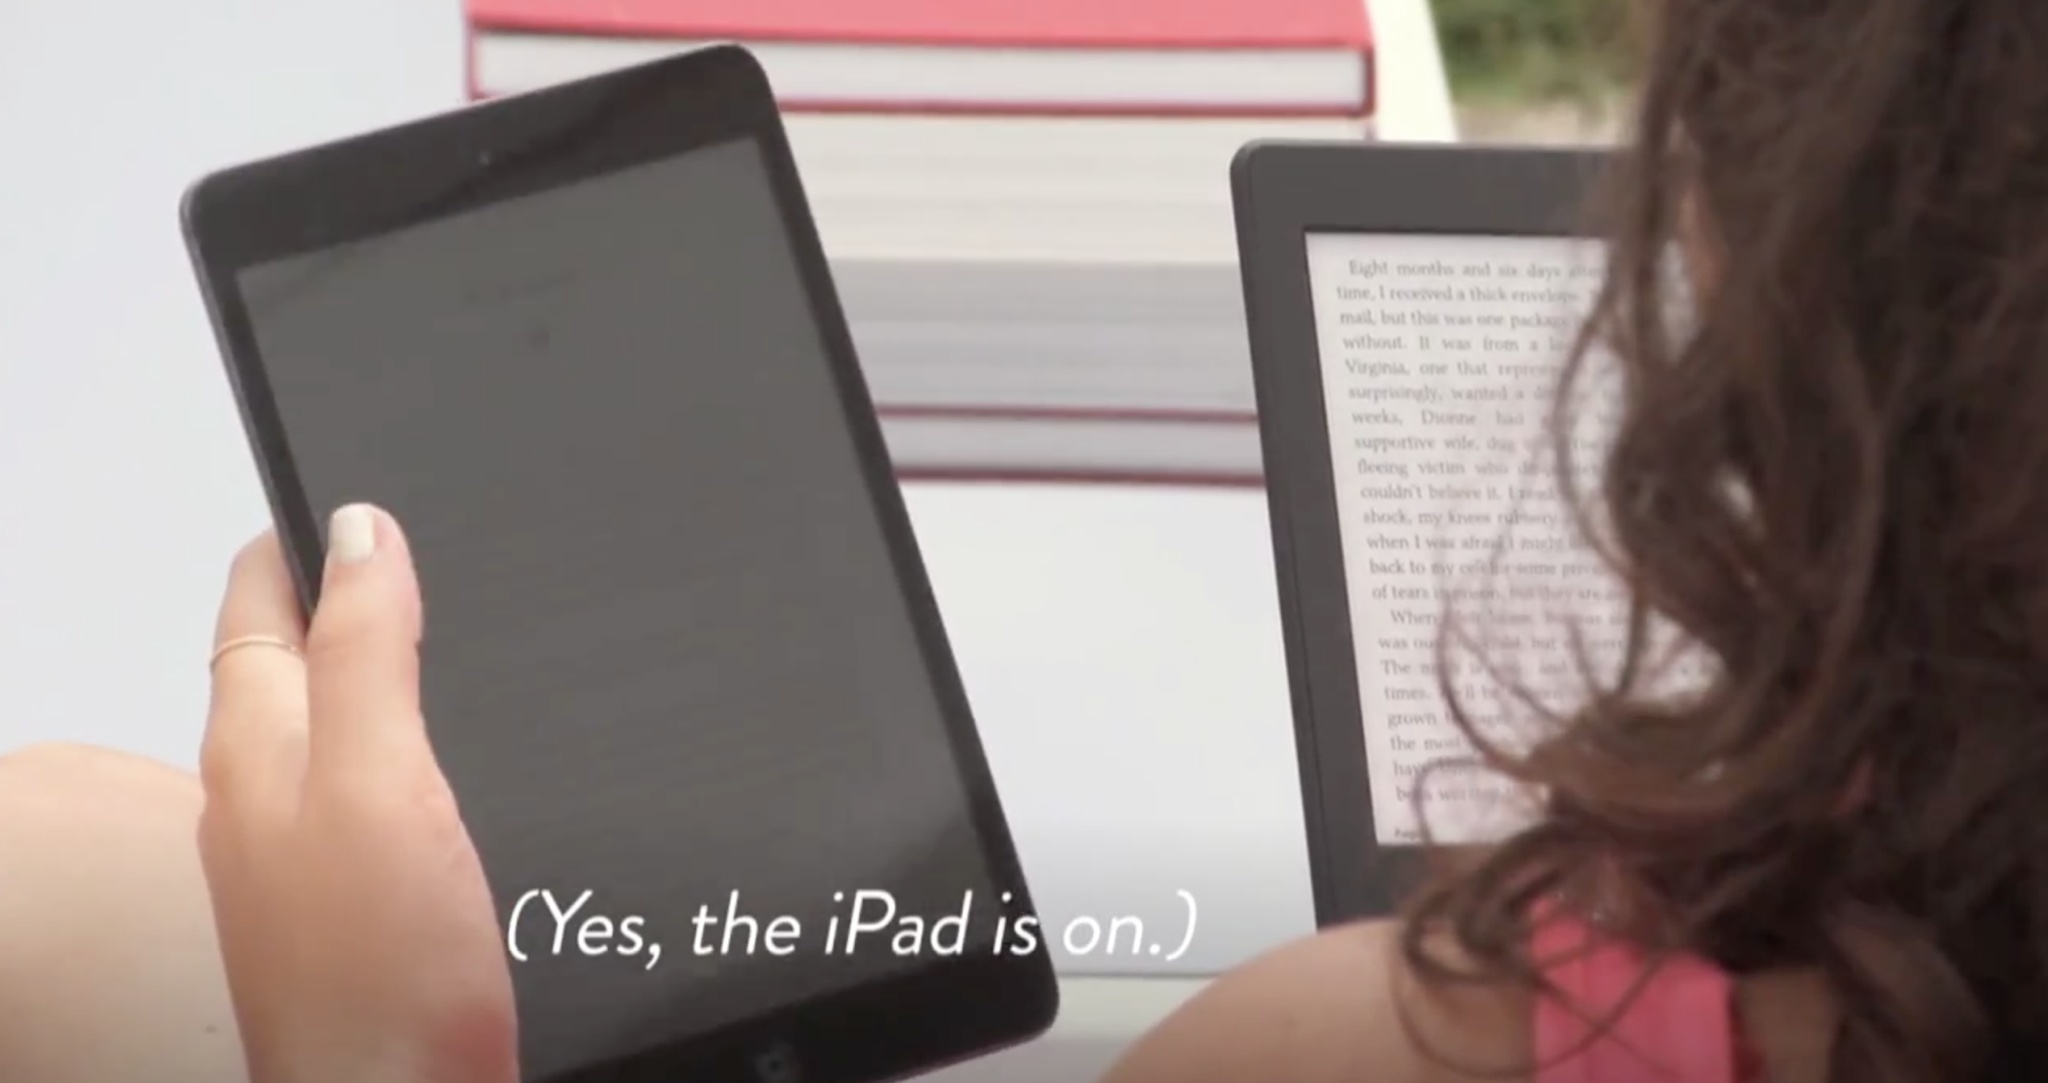 Amazon-2013-Kindle-Paperwhtite-ad-Yes-the-iPad-is-on-image-001.jpg